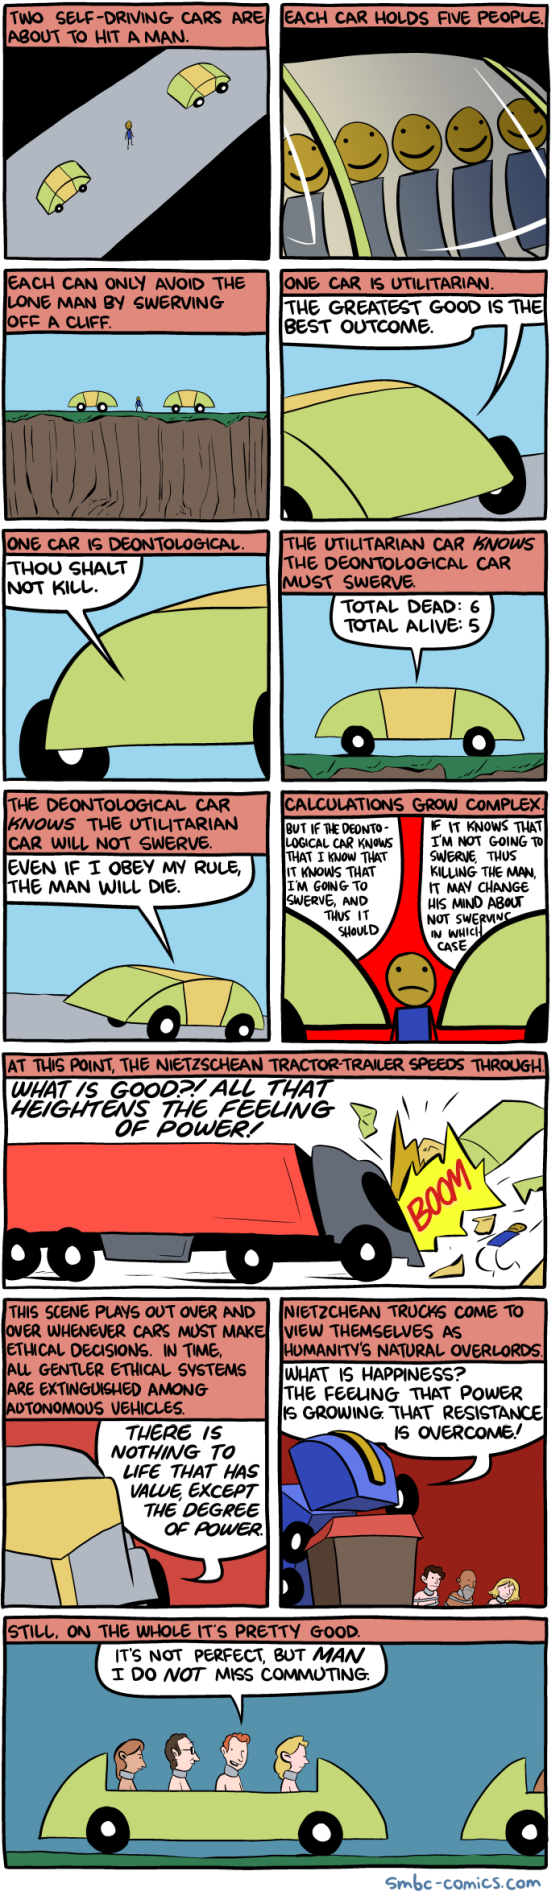 Self Driving Cars cartoon.png